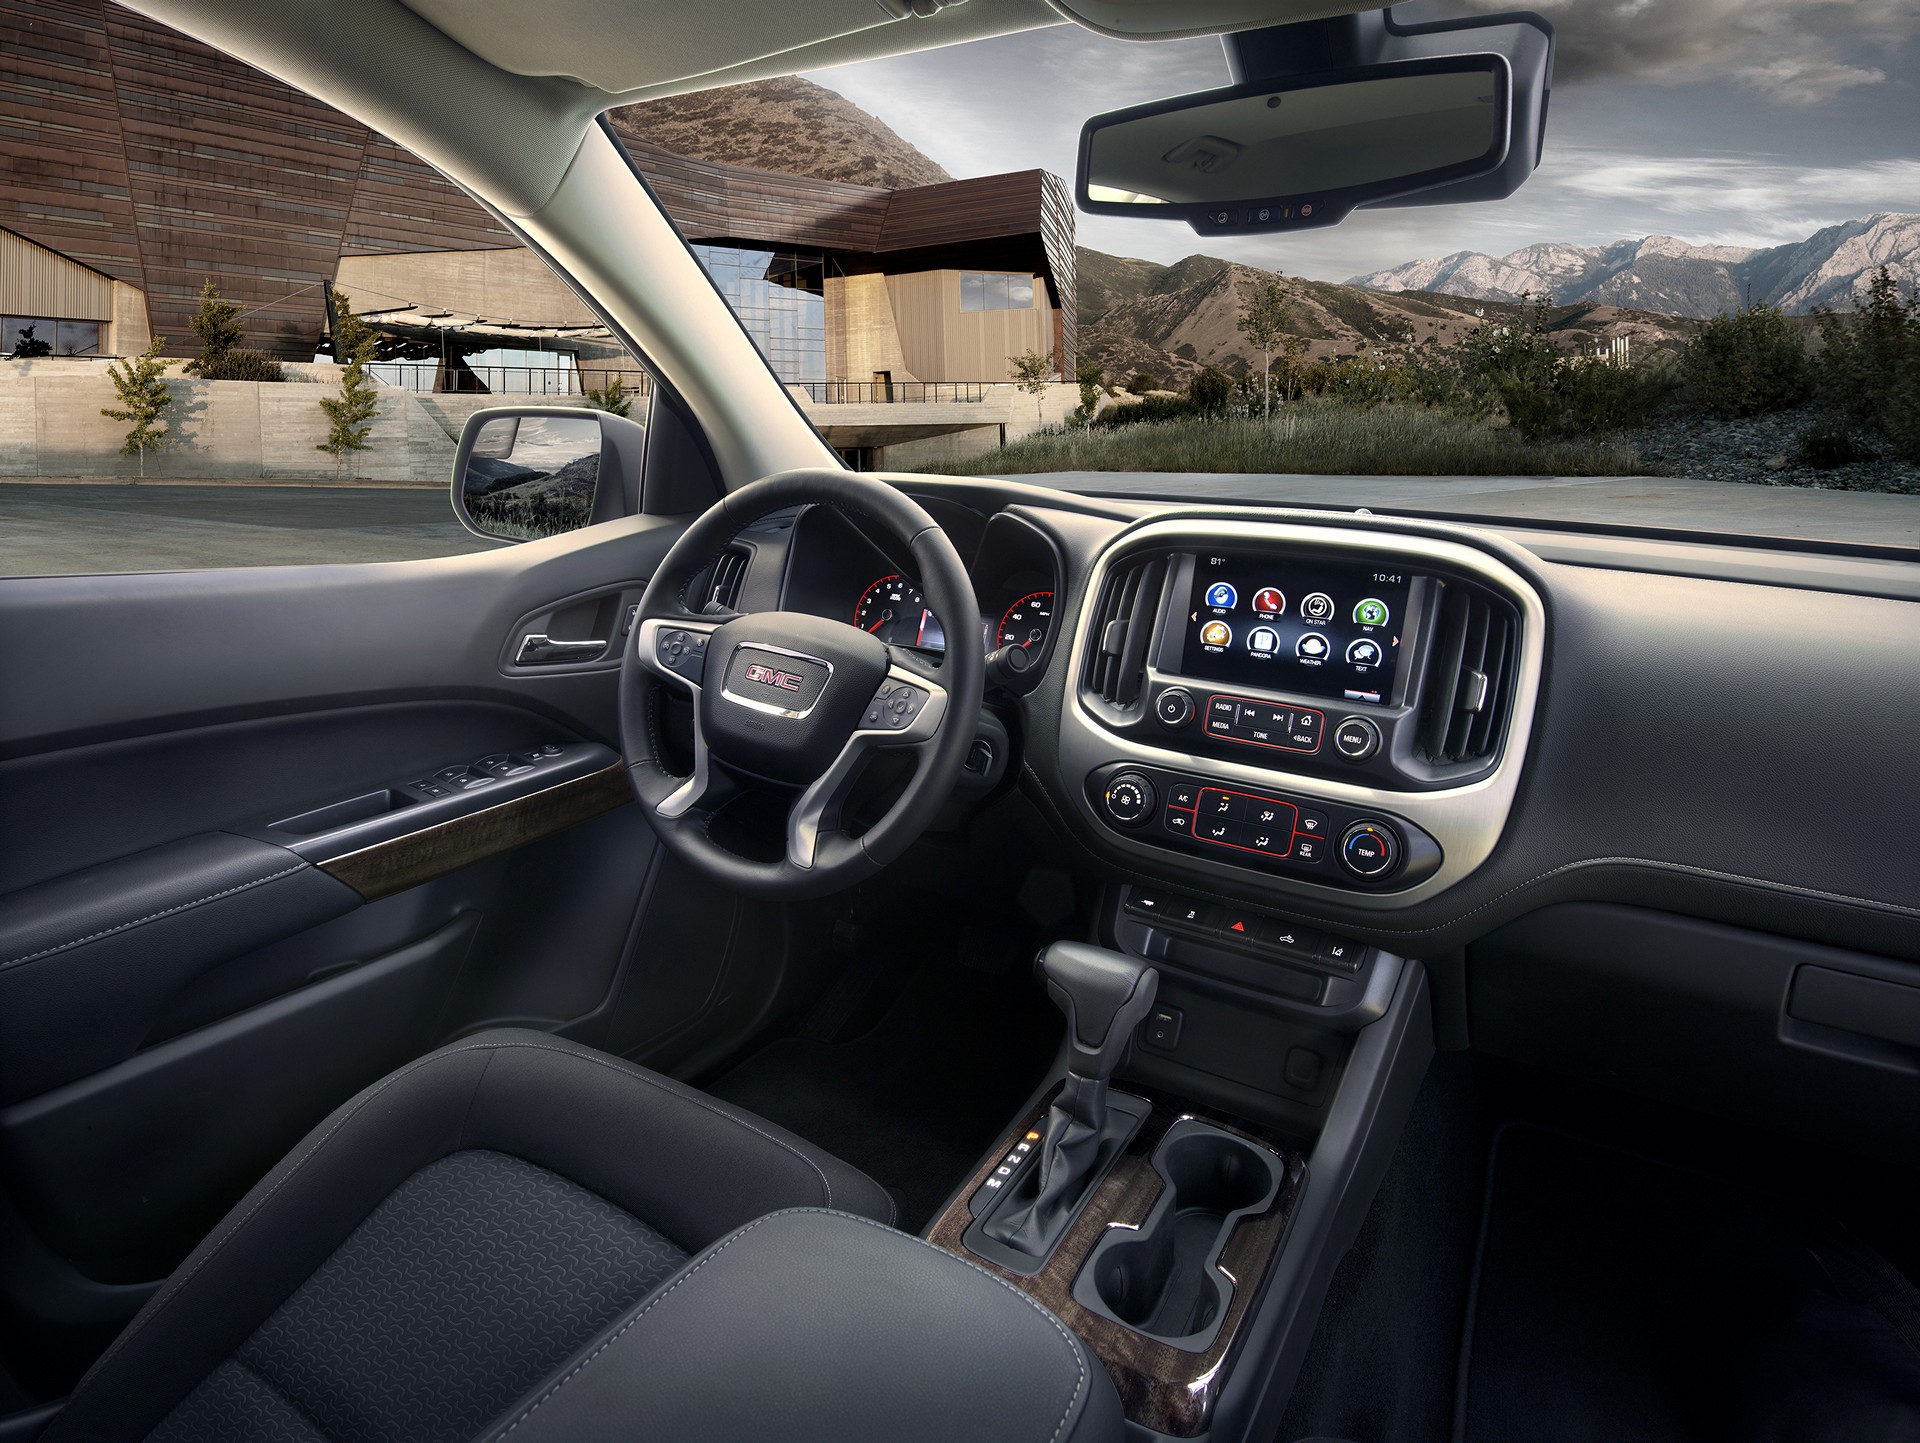 2016 GMC Canyon Extended Cab SLT Interior in Jet Black © General Motors